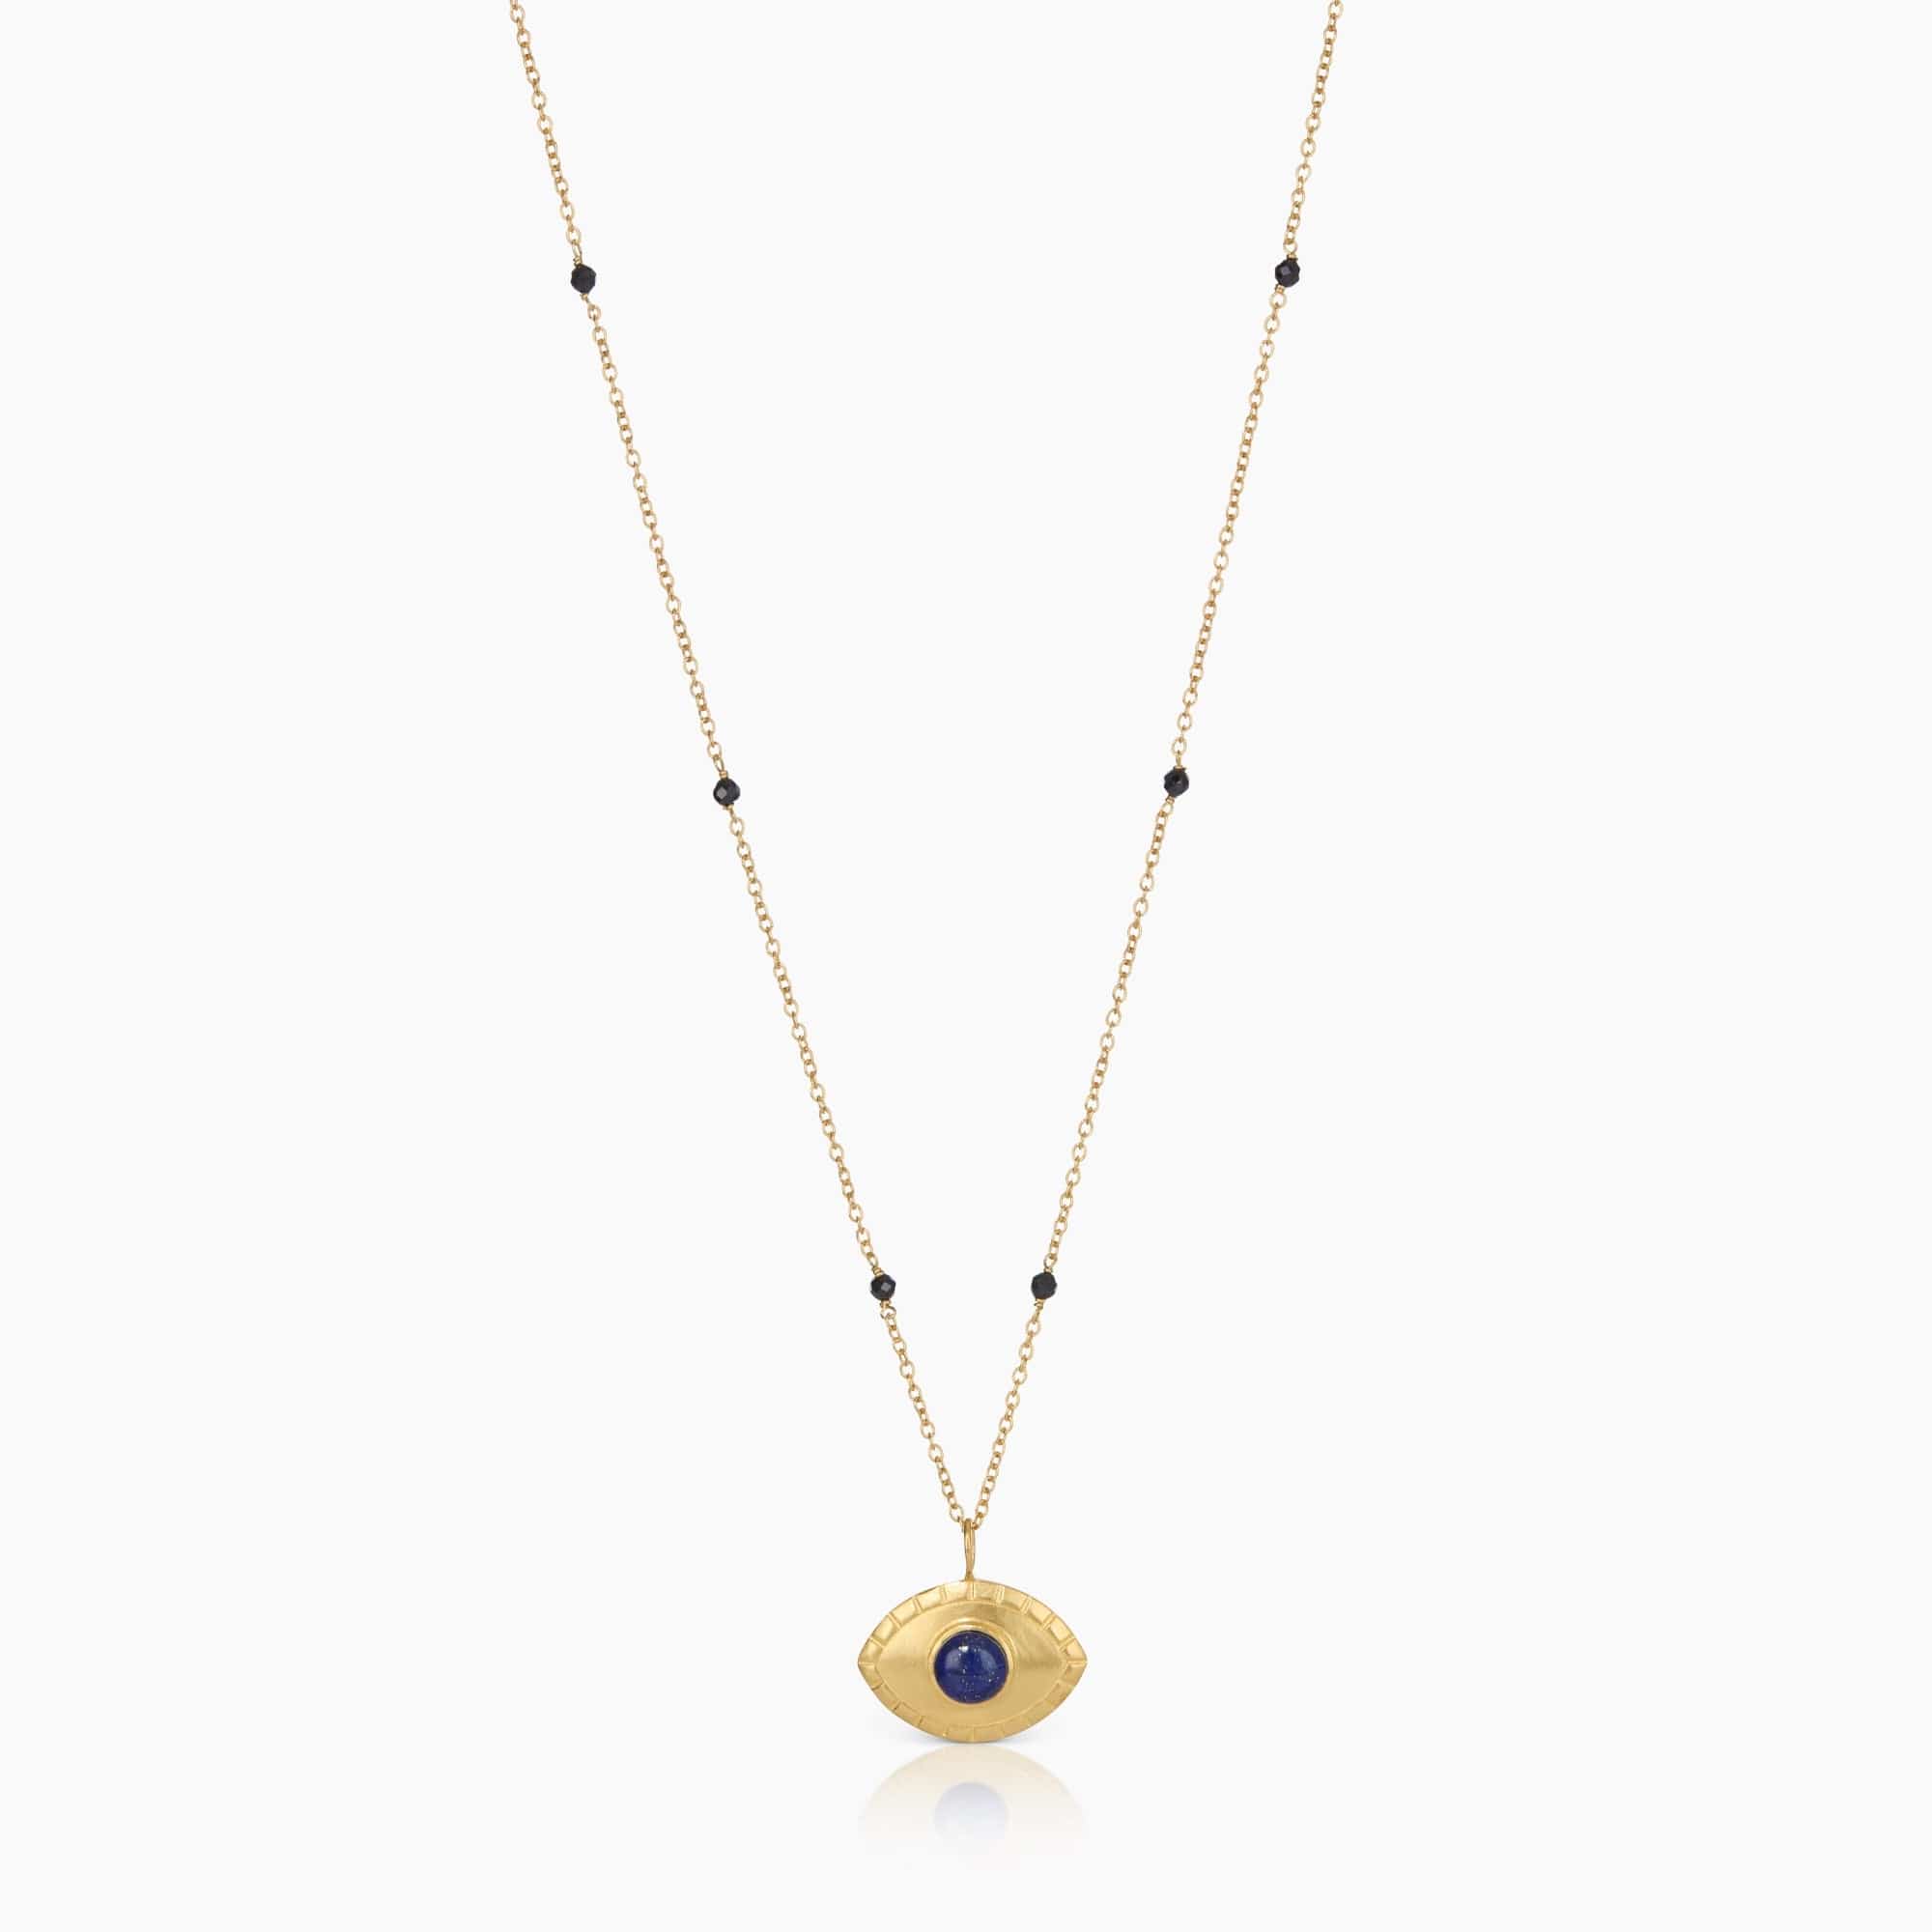 Fervor Montreal Necklace Divine Eye Lapis Lazuli Necklace (Small)